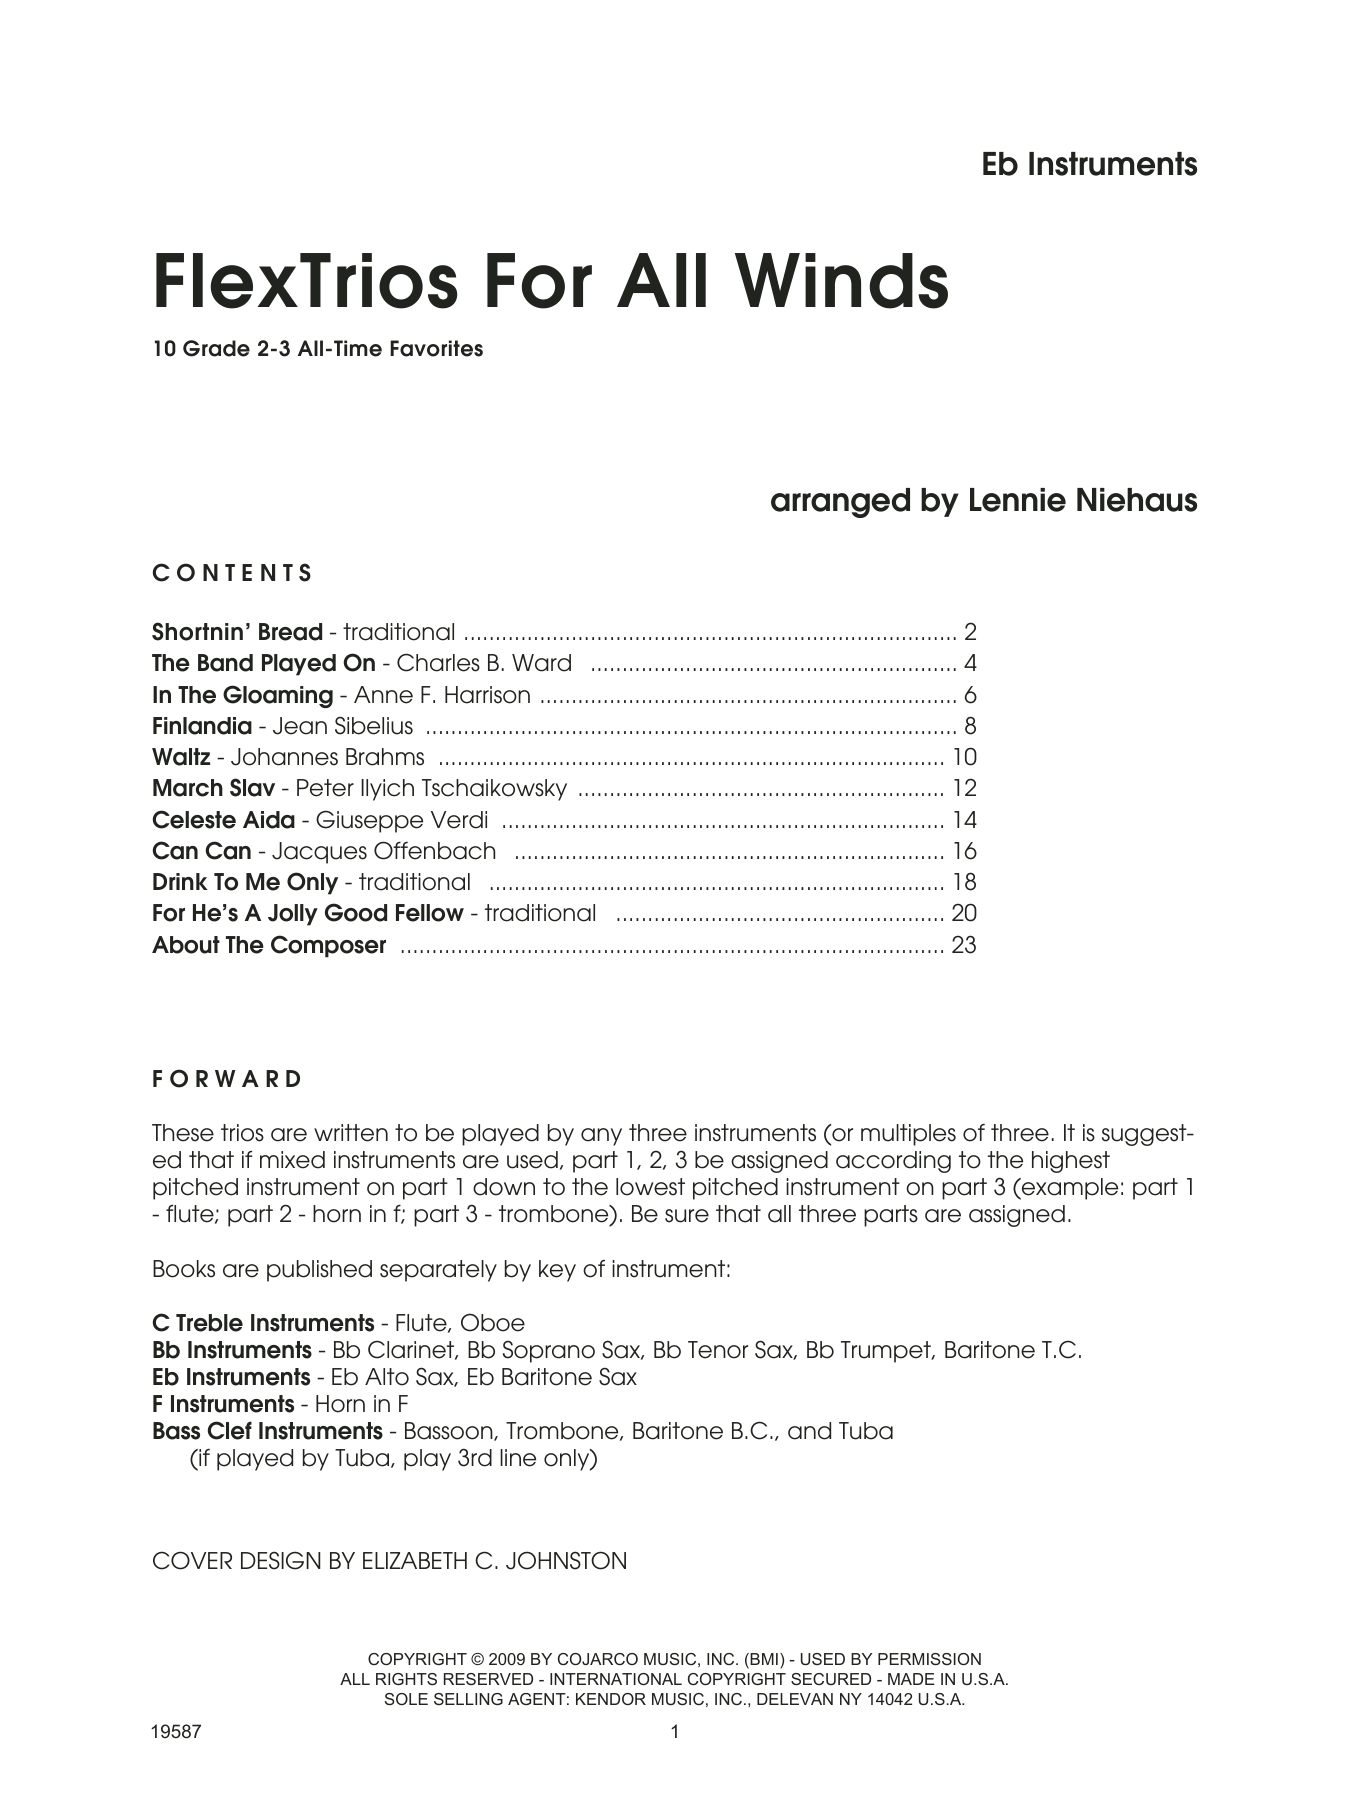 Download Lennie Niehaus FlexTrios For All Winds (Eb Instruments Sheet Music